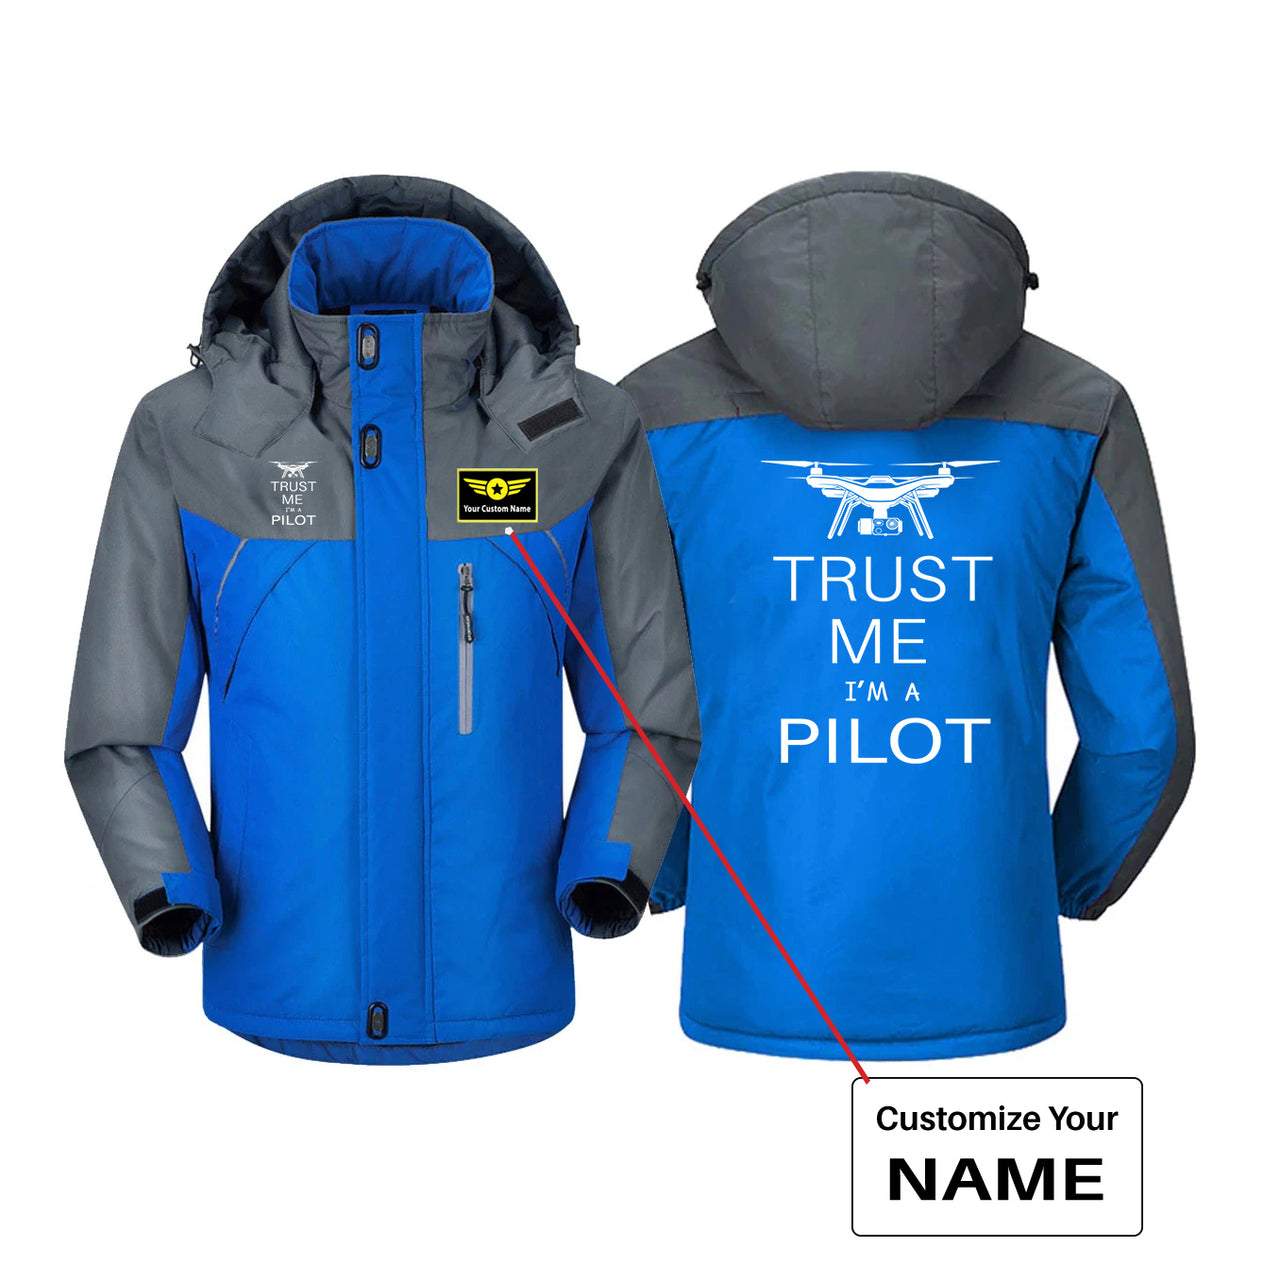 Trust Me I'm a Pilot (Drone) Designed Thick Winter Jackets